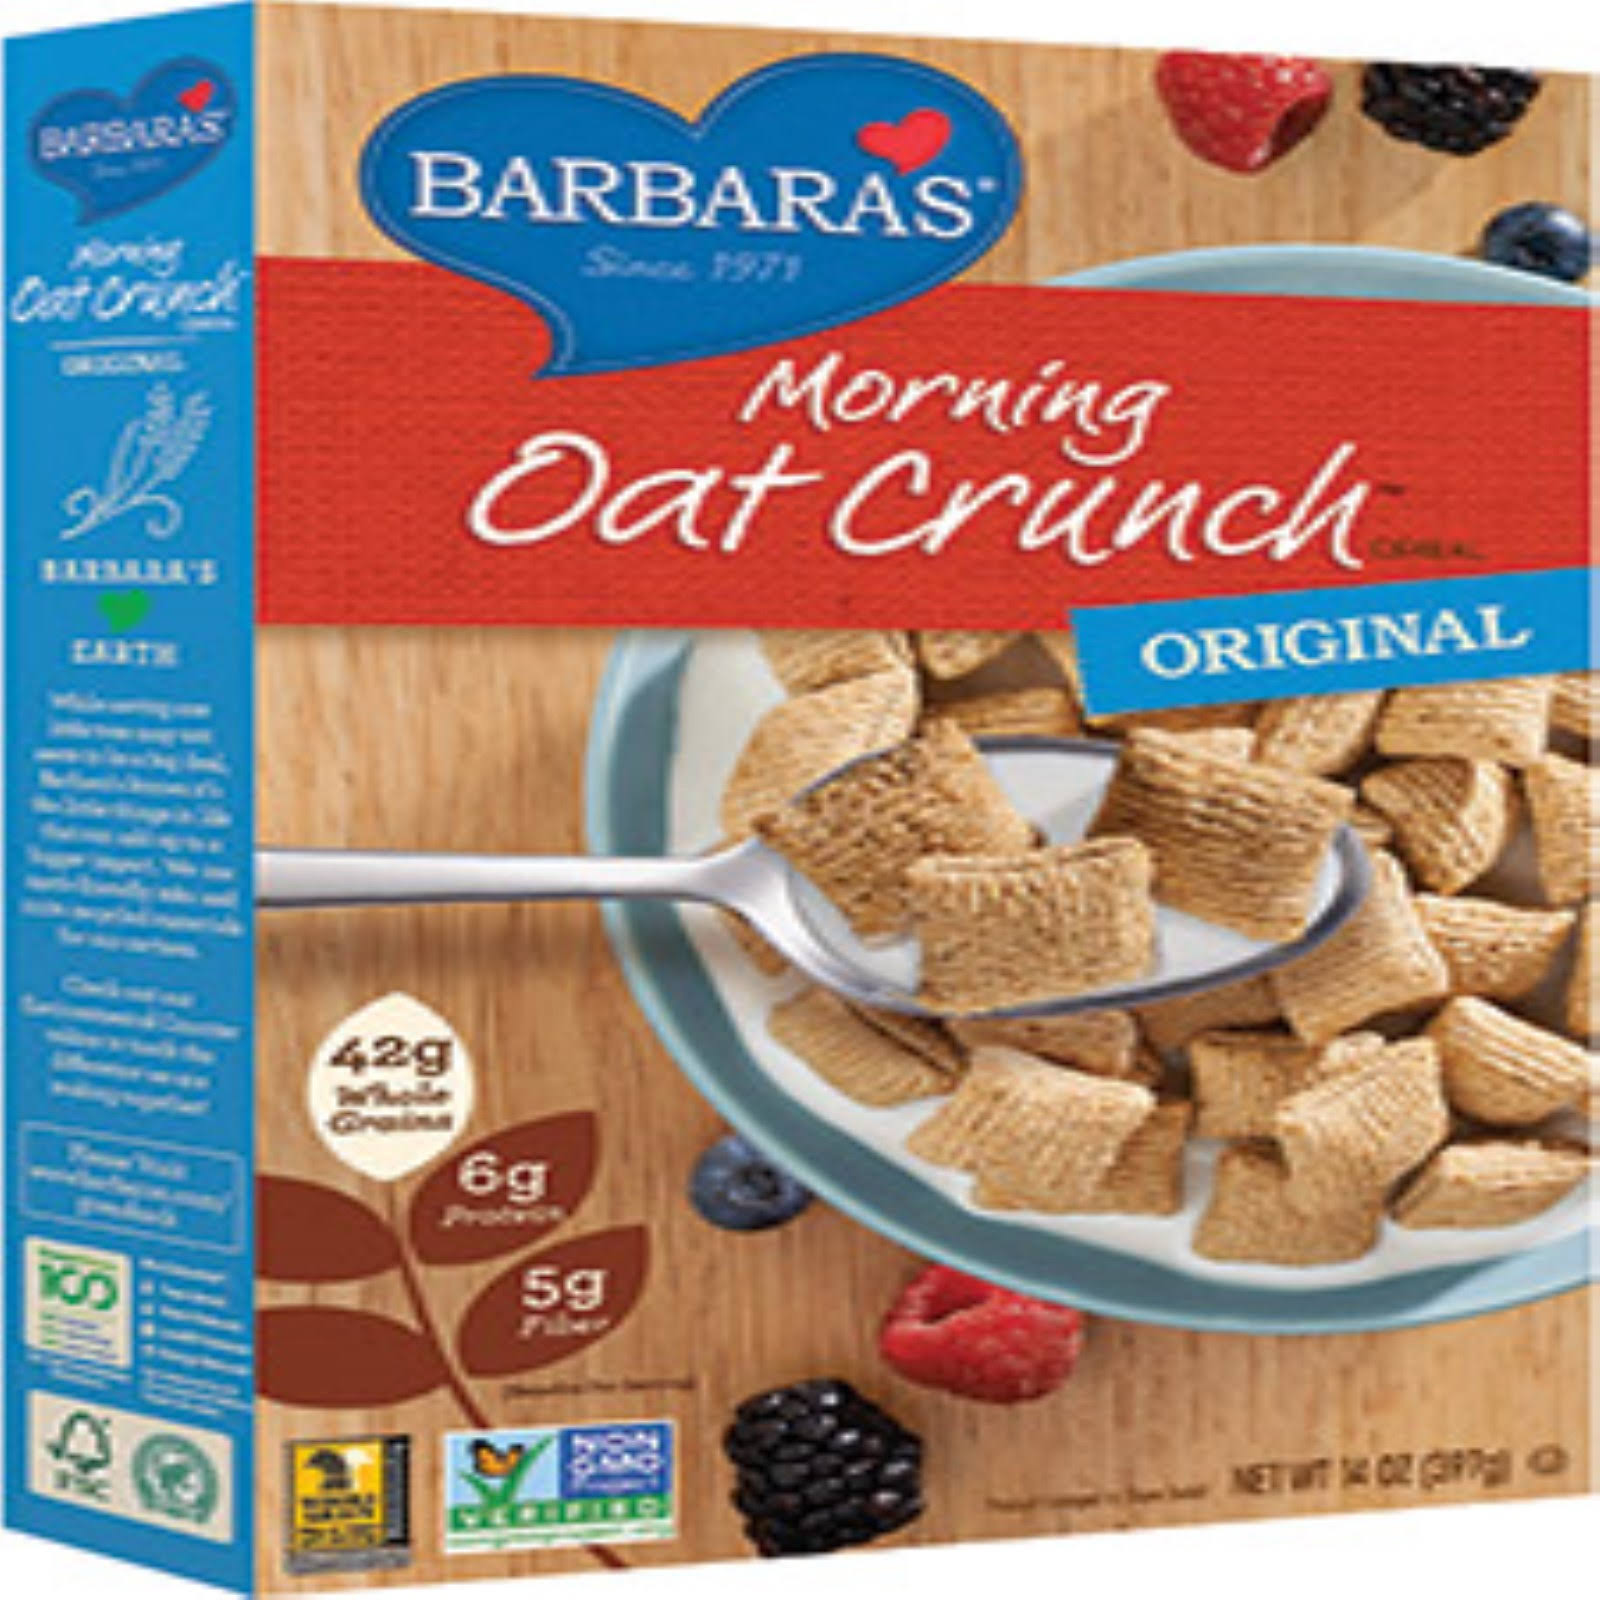 Barbara's Morning Oat Crunch Cereal - Original